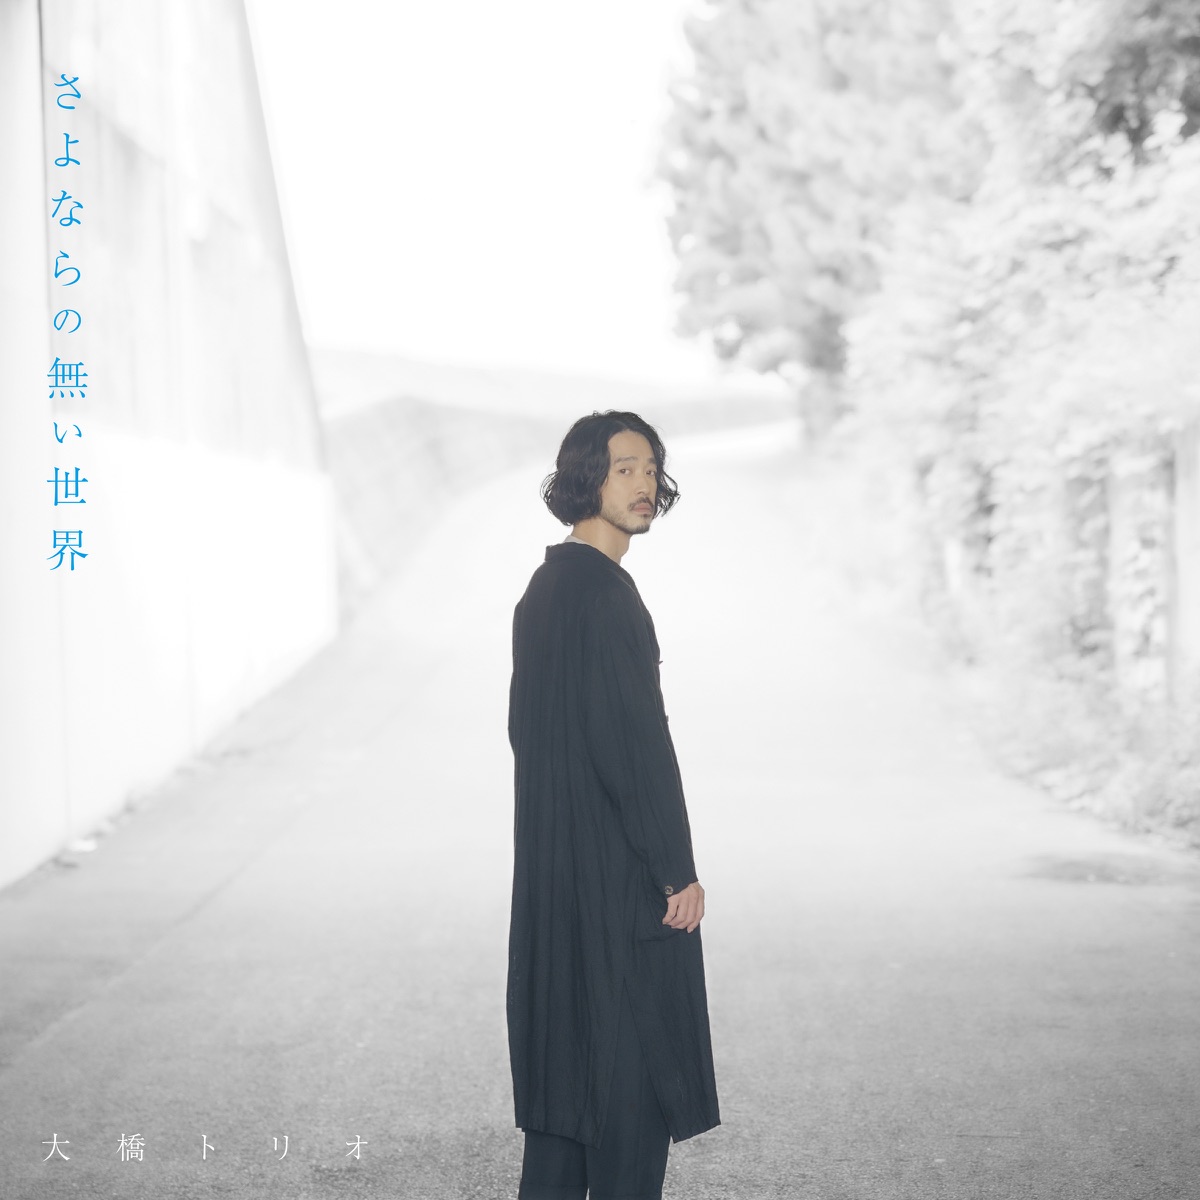 Cover art for『Ohashi Trio - さよならの無い世界』from the release『Sayonara no Nai Sekai